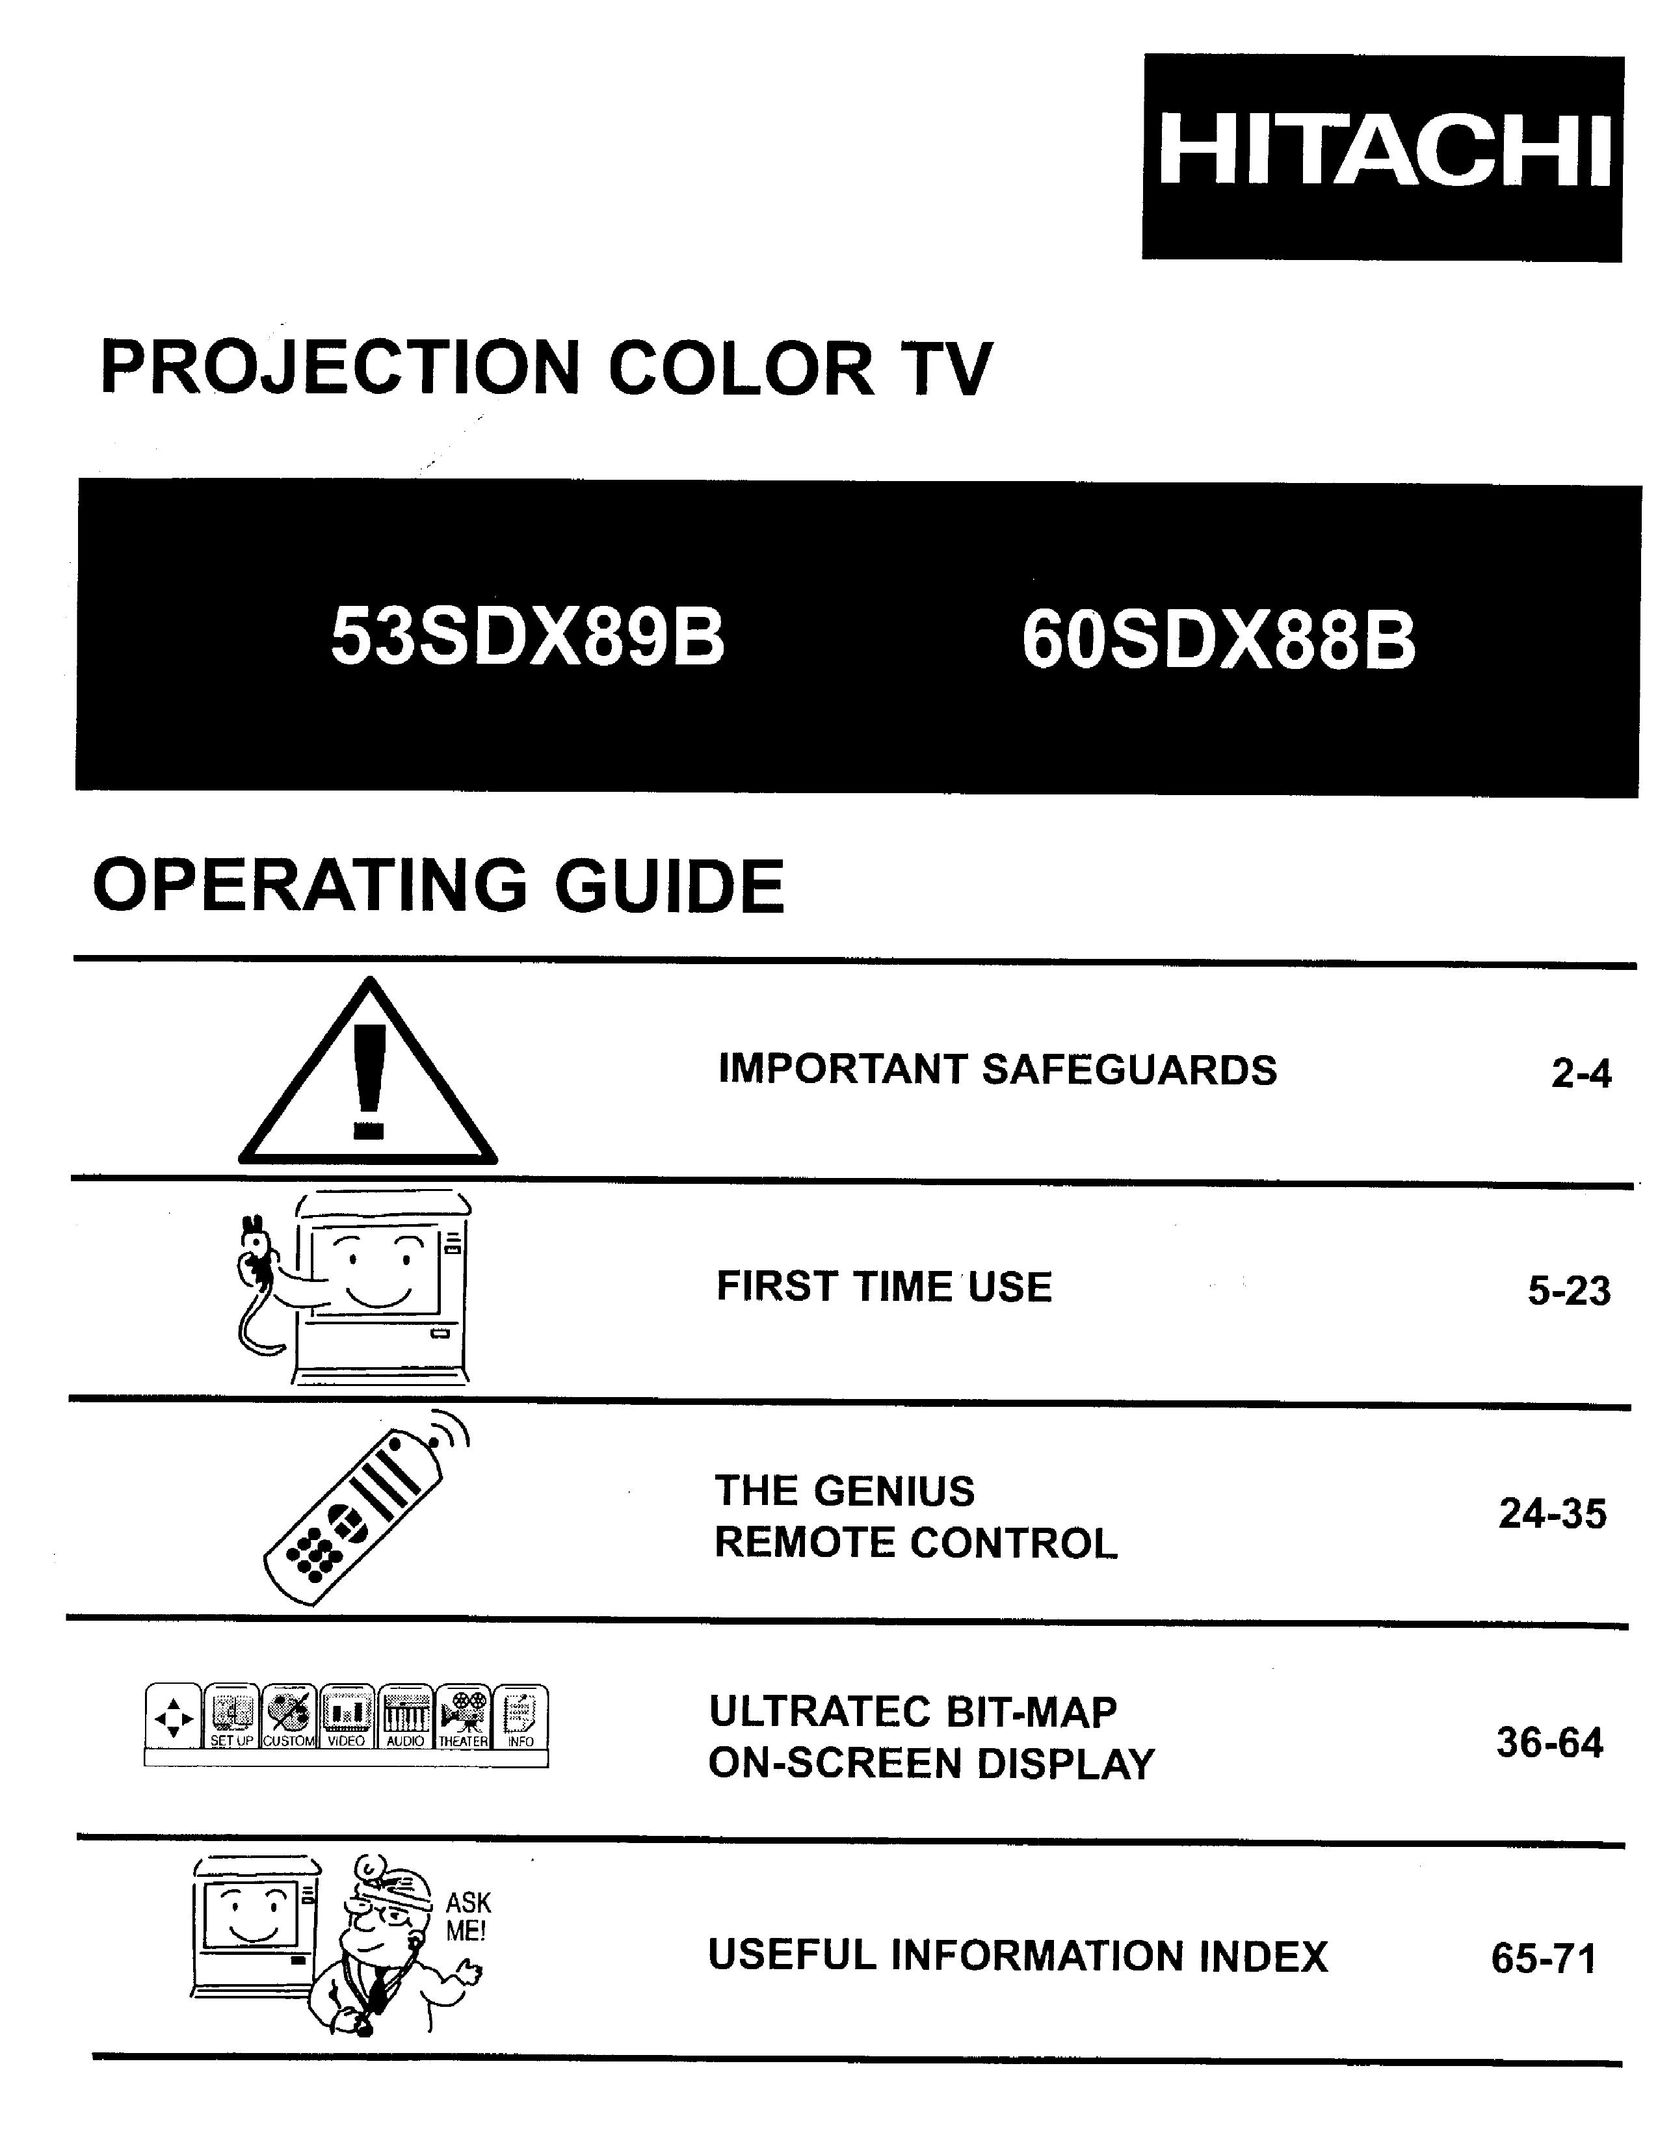 Hitachi 60SDX88B Projector User Manual